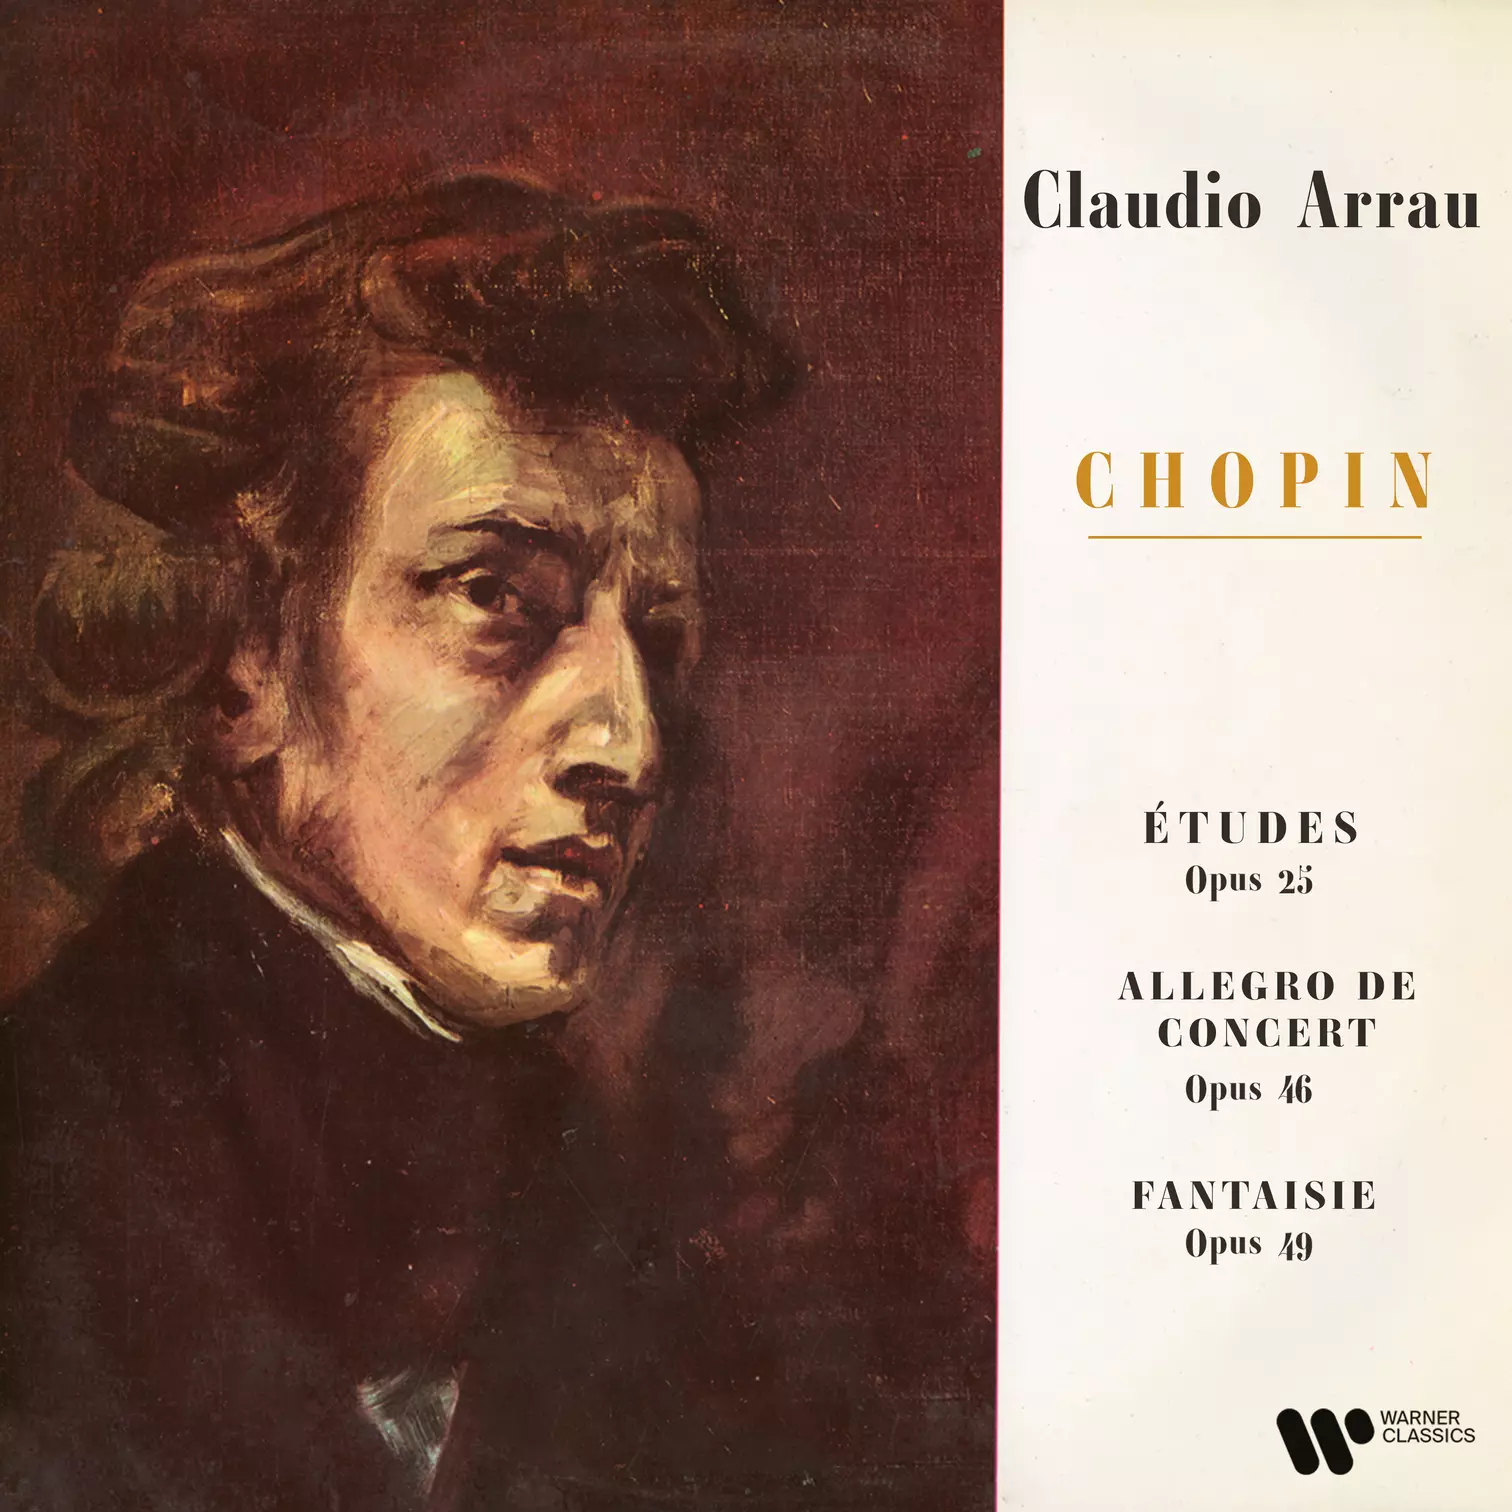 Chopin Forever: a digital retrospective on Google Arts & Culture